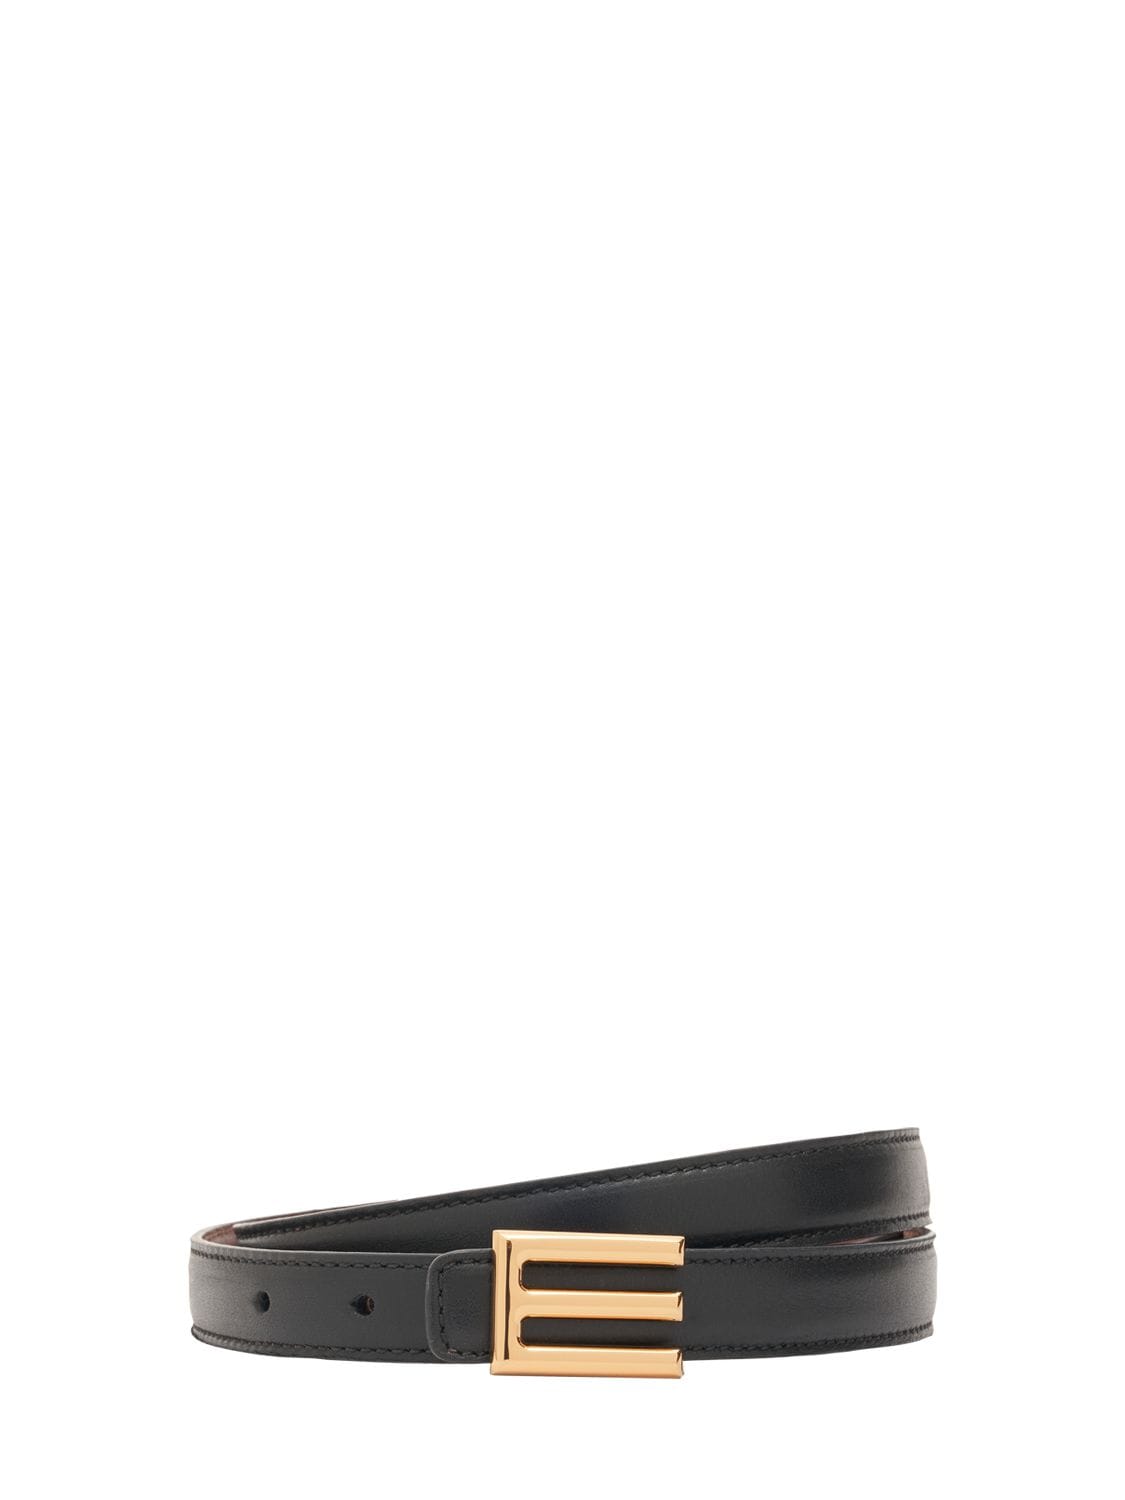 Etro Reversible Leather Belt In Black